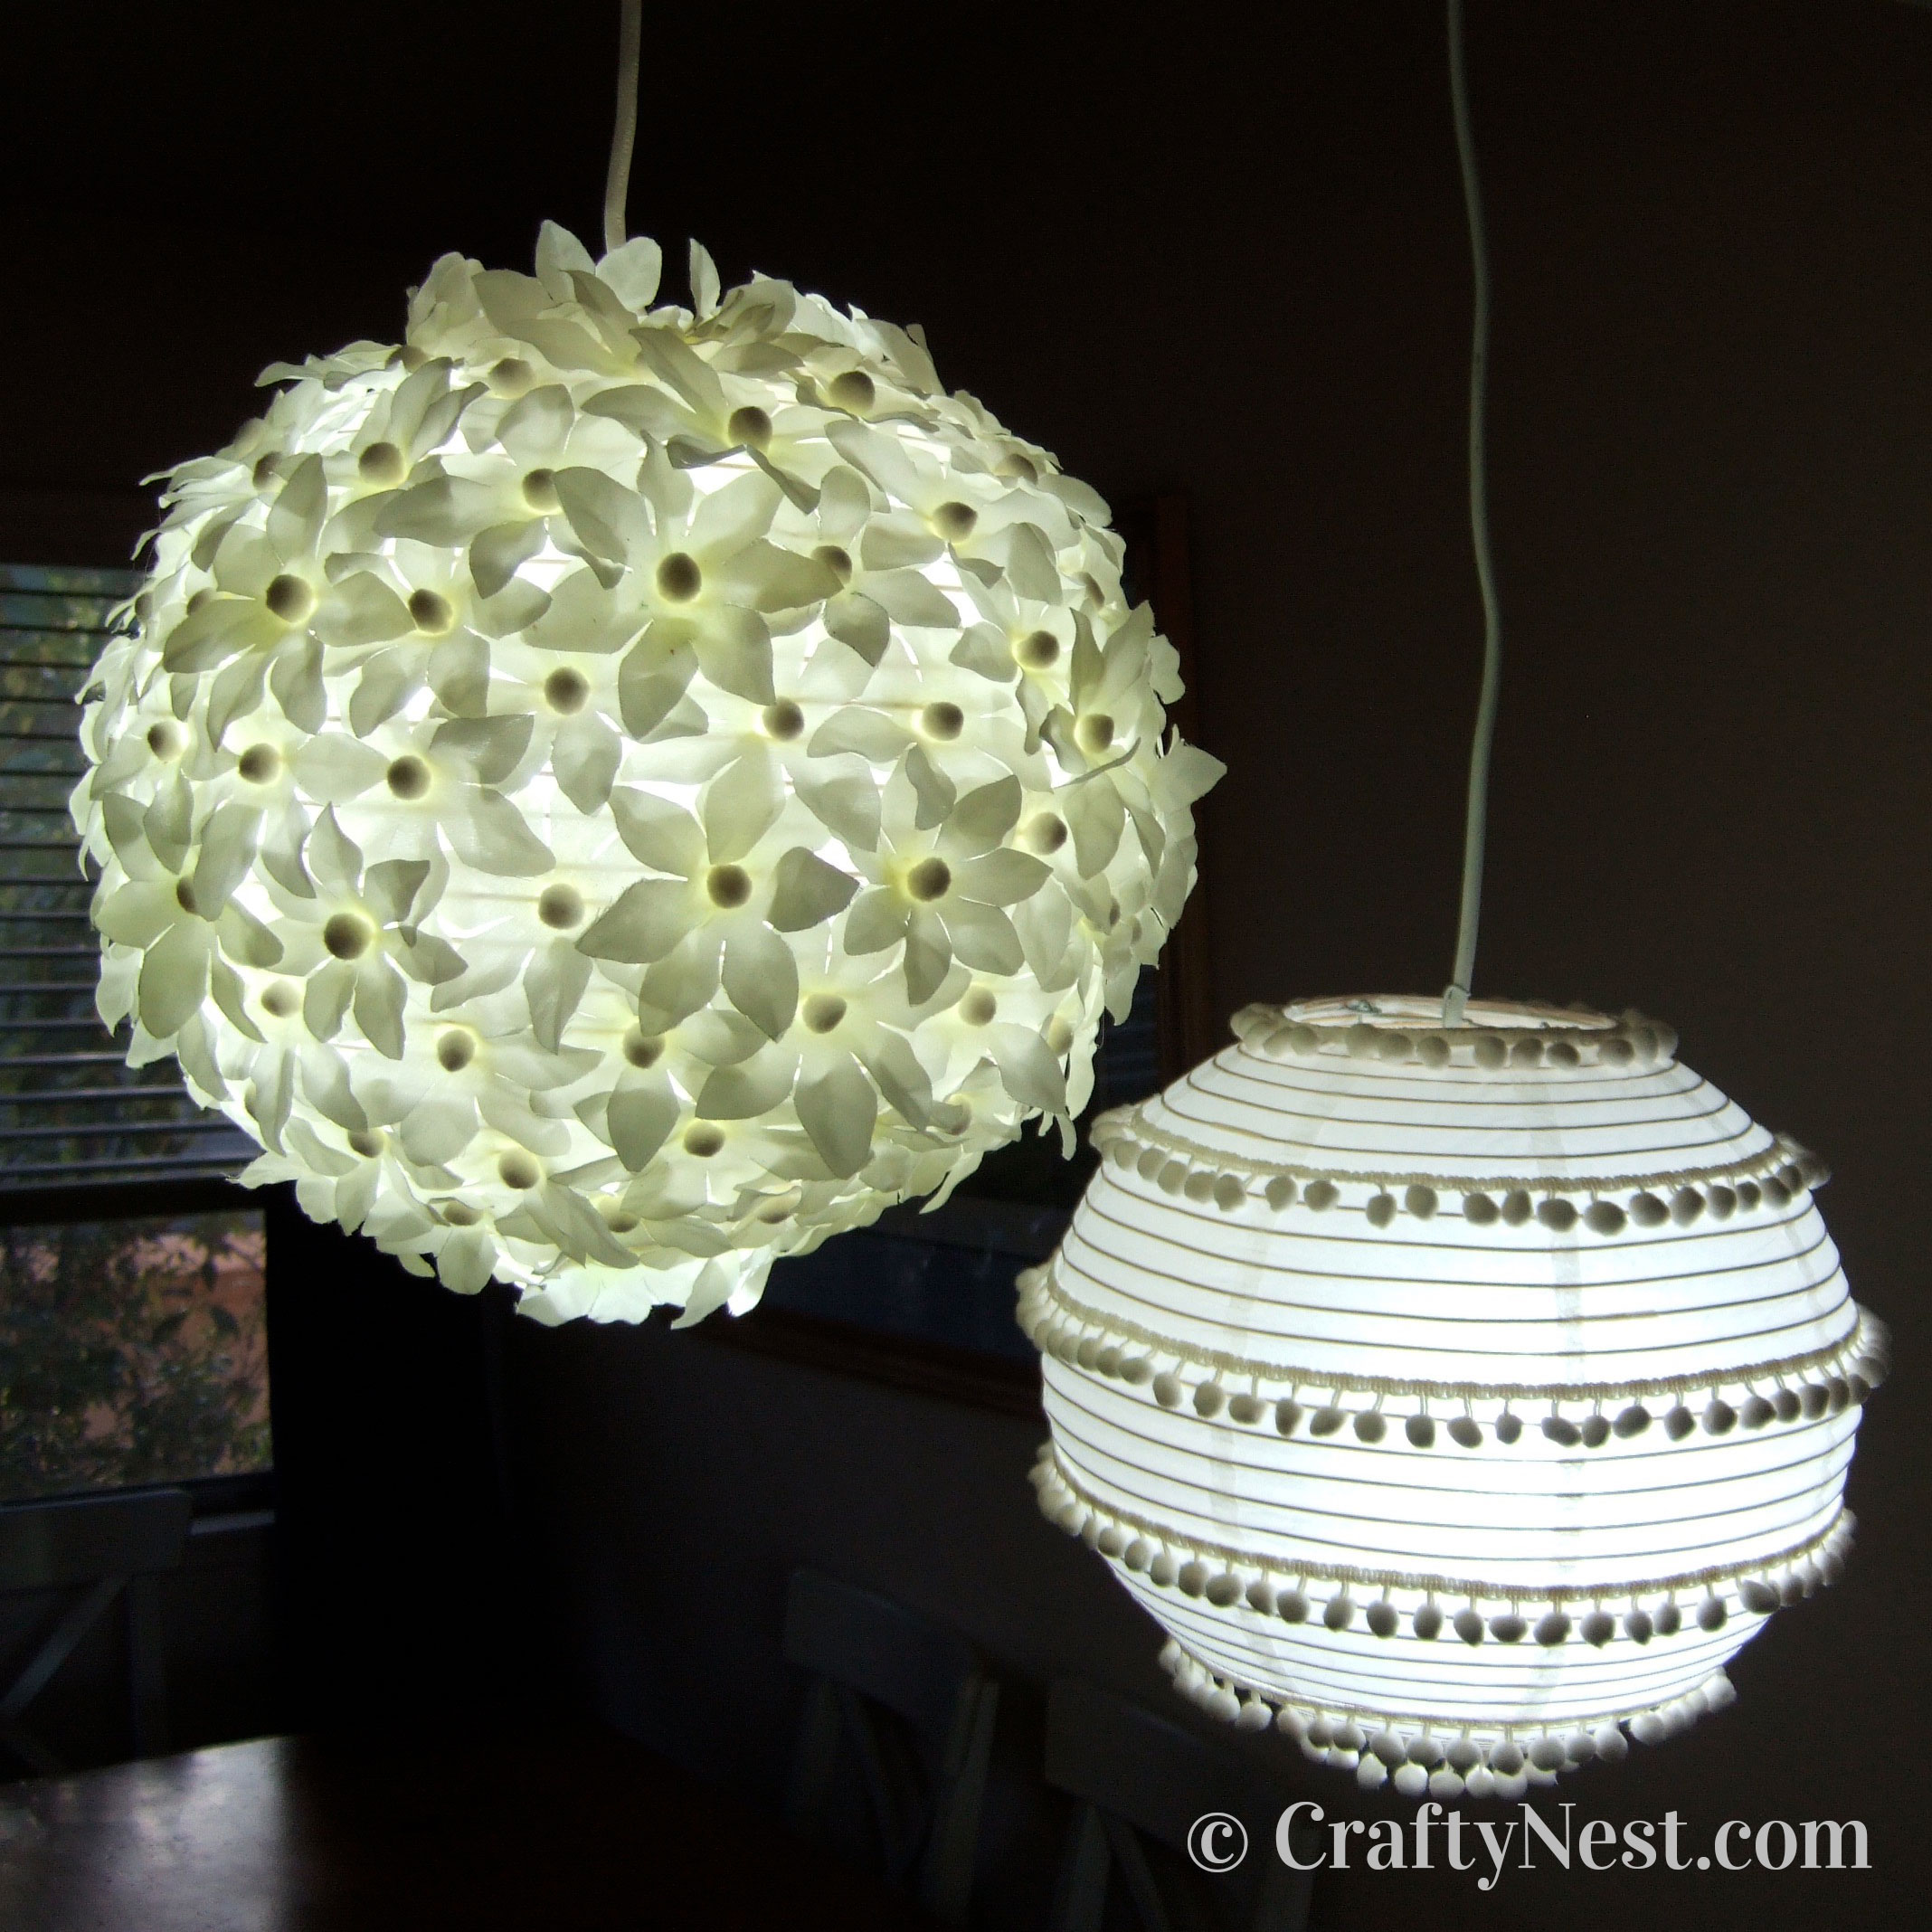 Download Two paper lanterns: flowers & pom poms | Crafty Nest